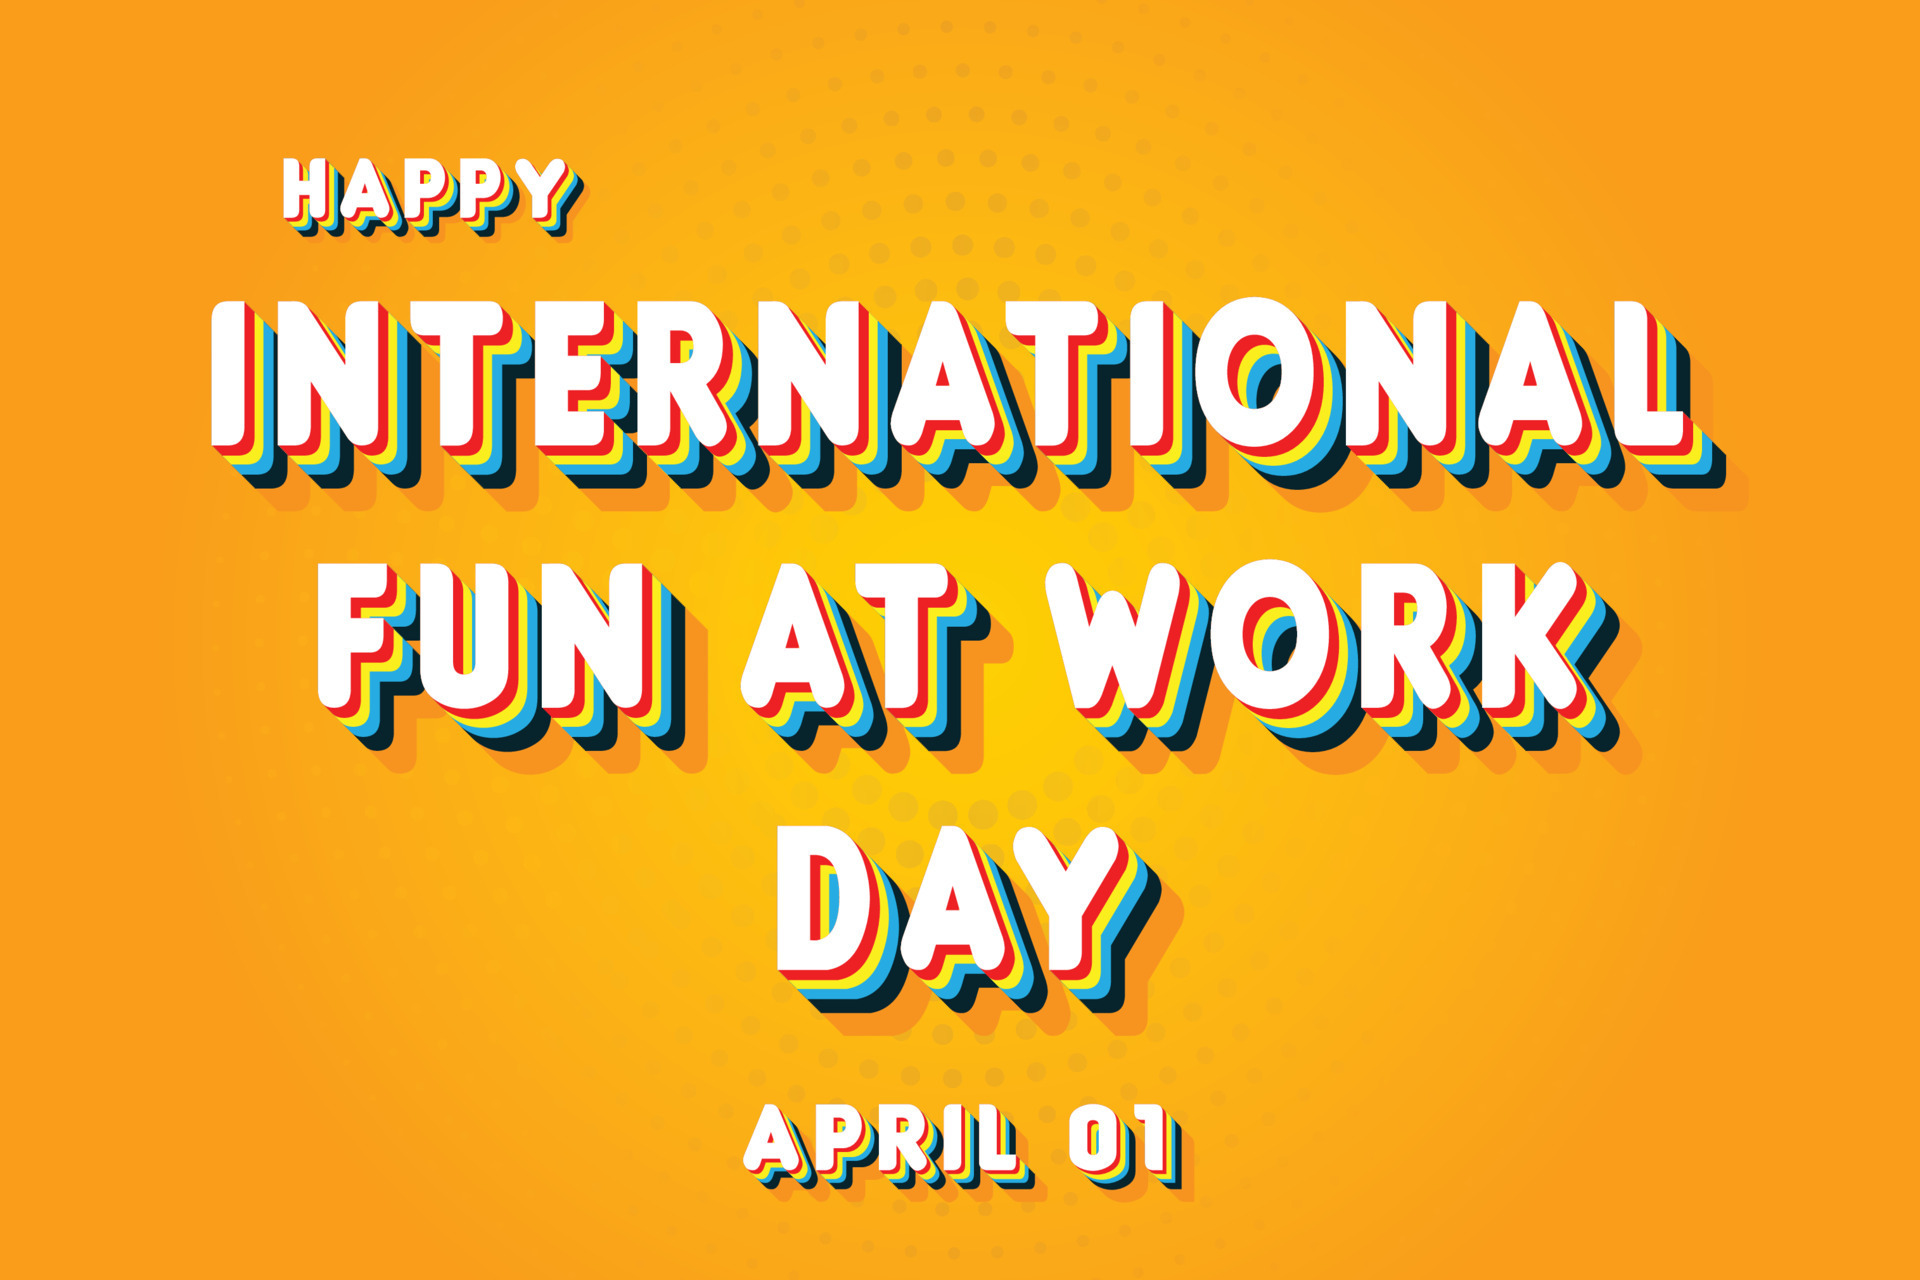 Happy International Fun at Work Day, April 01. Calendar of April